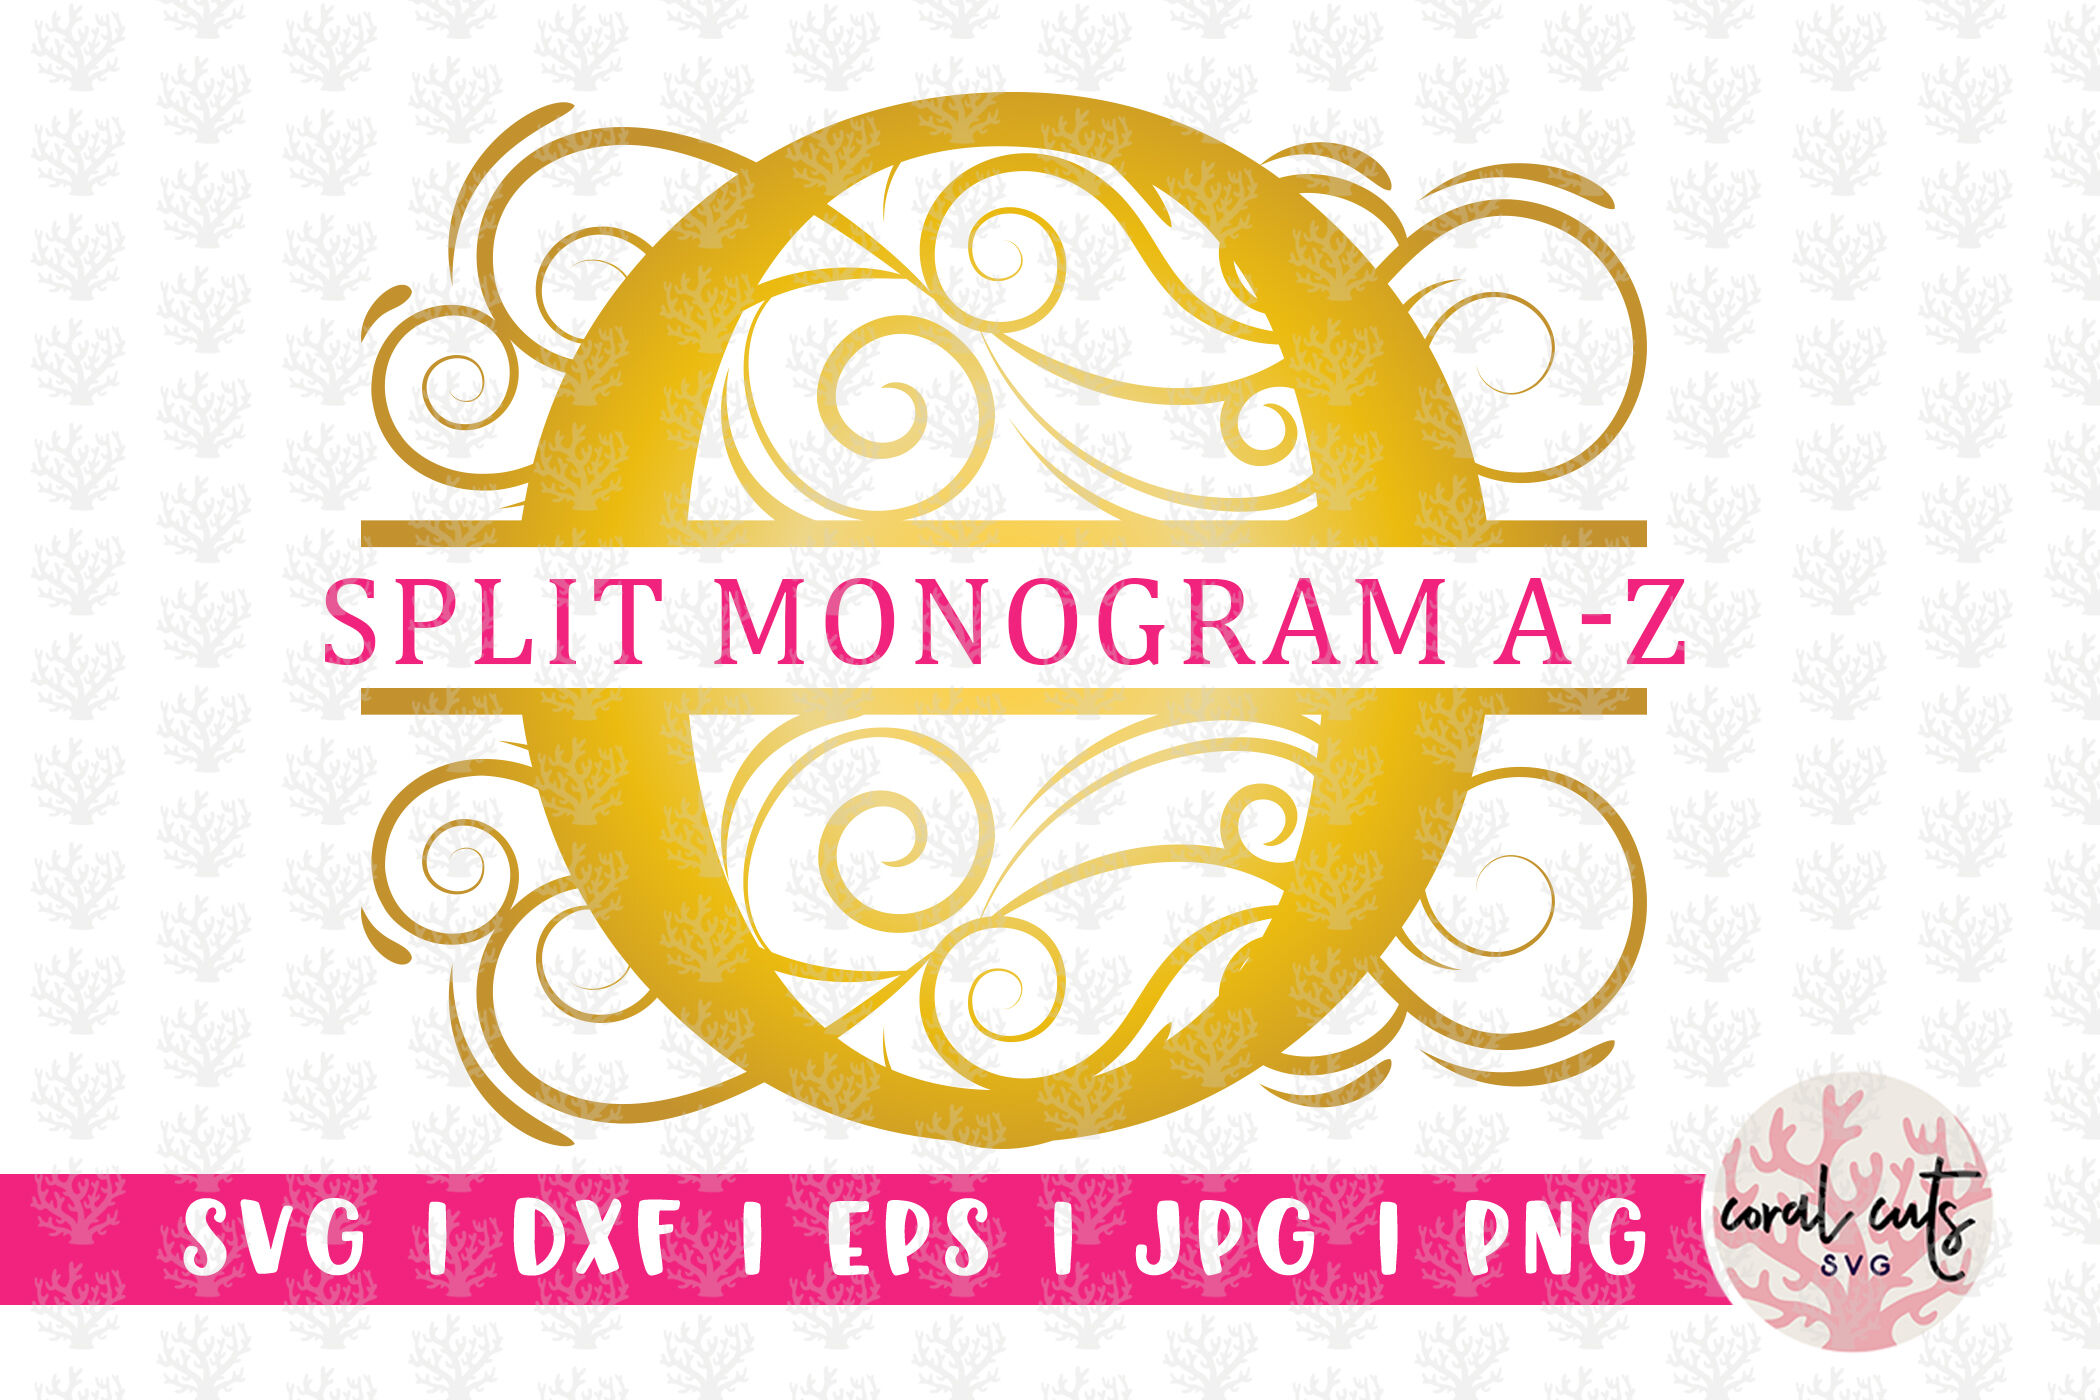 Download Decorative Swirl Split Monogram Alphabets A To Z Eps Svg Dxf Jpg P By Coralcuts Thehungryjpeg Com